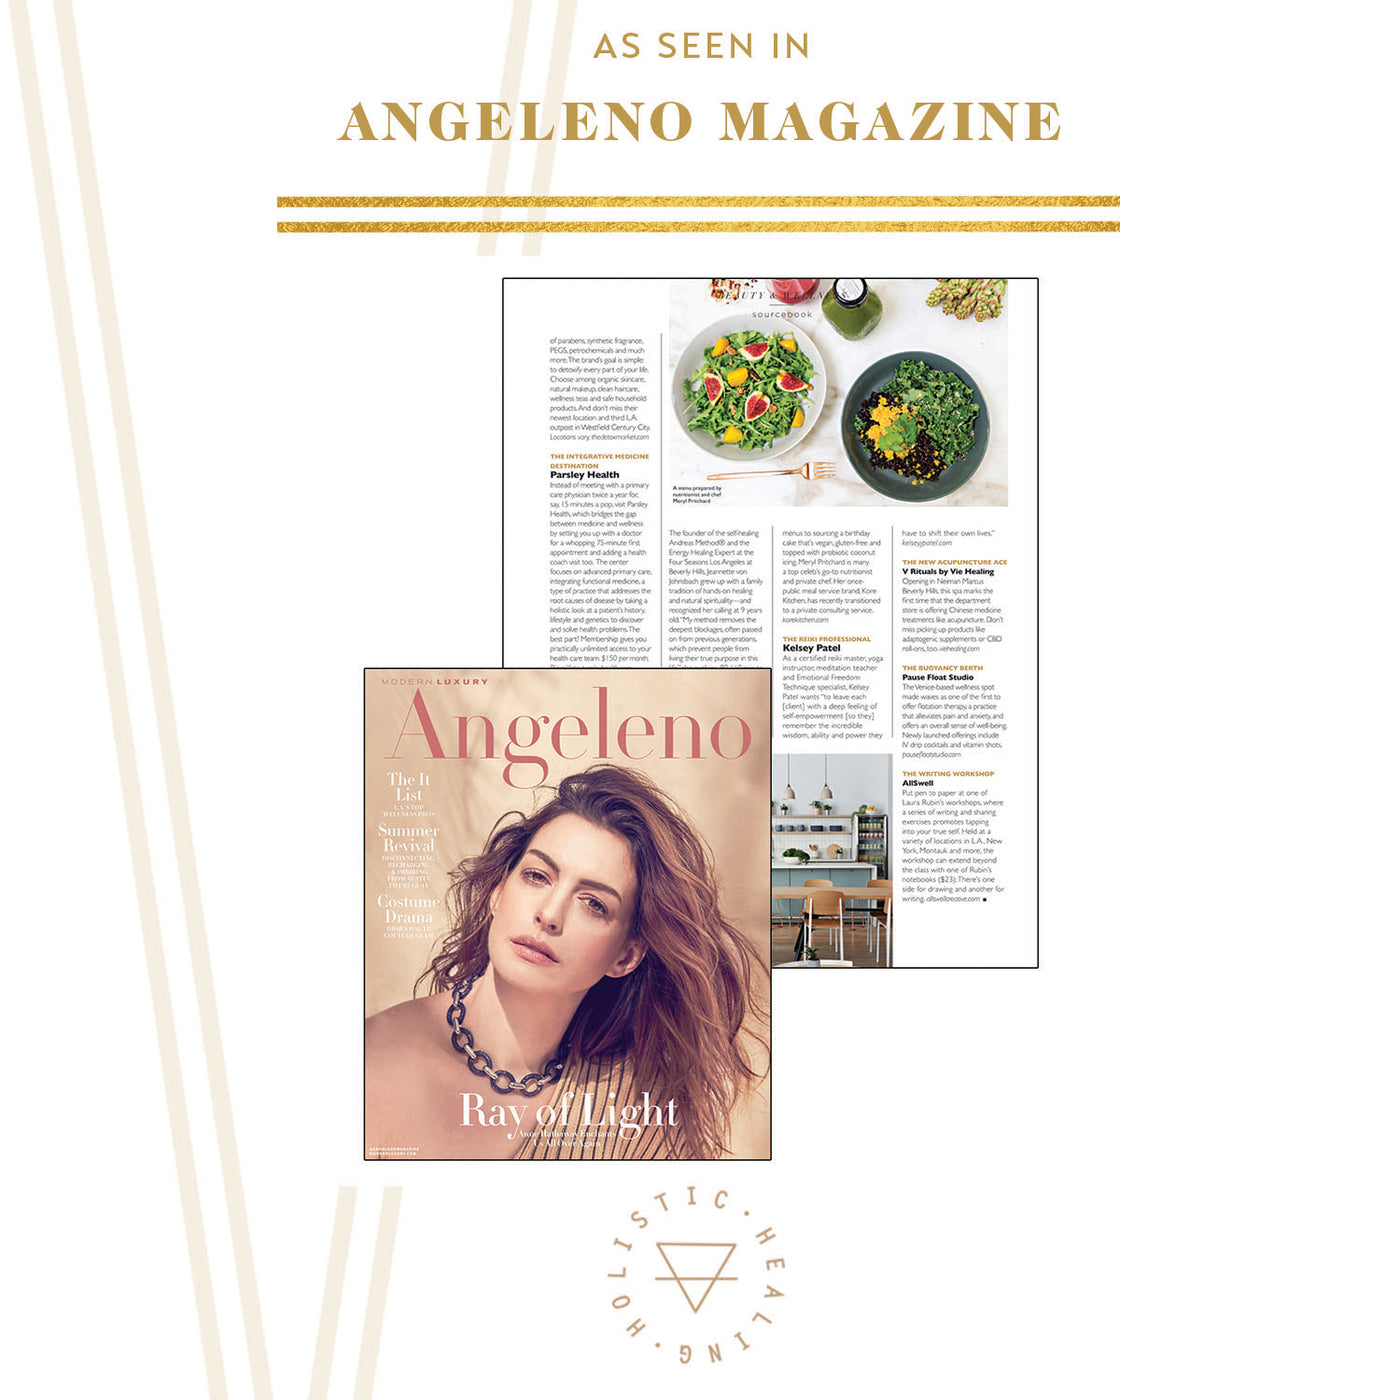 Angeleno Magazine May Feature